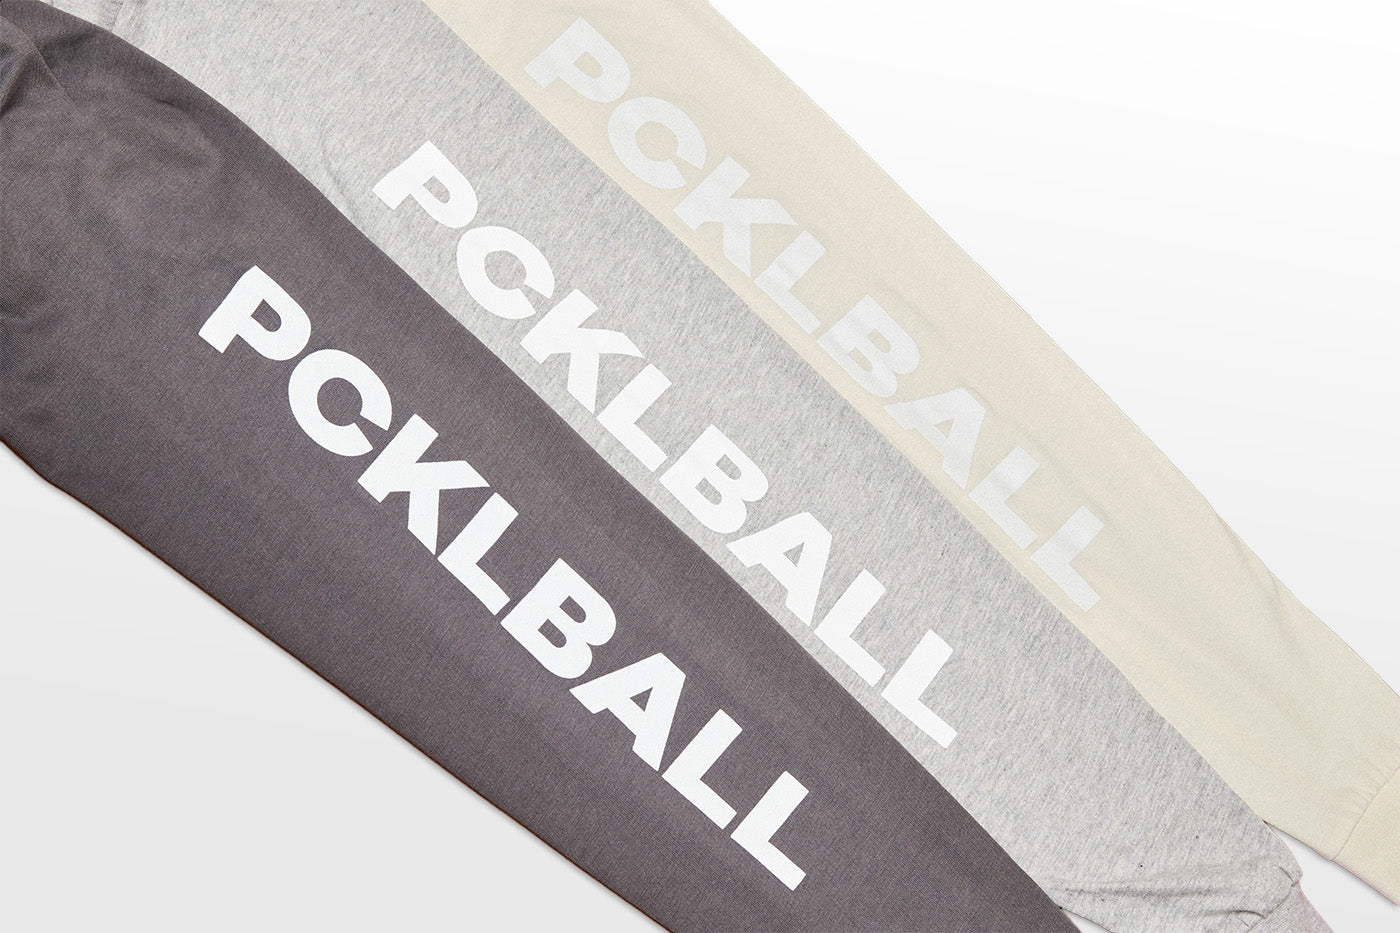 PCKLBALL Long Sleeve Unisex Shirt